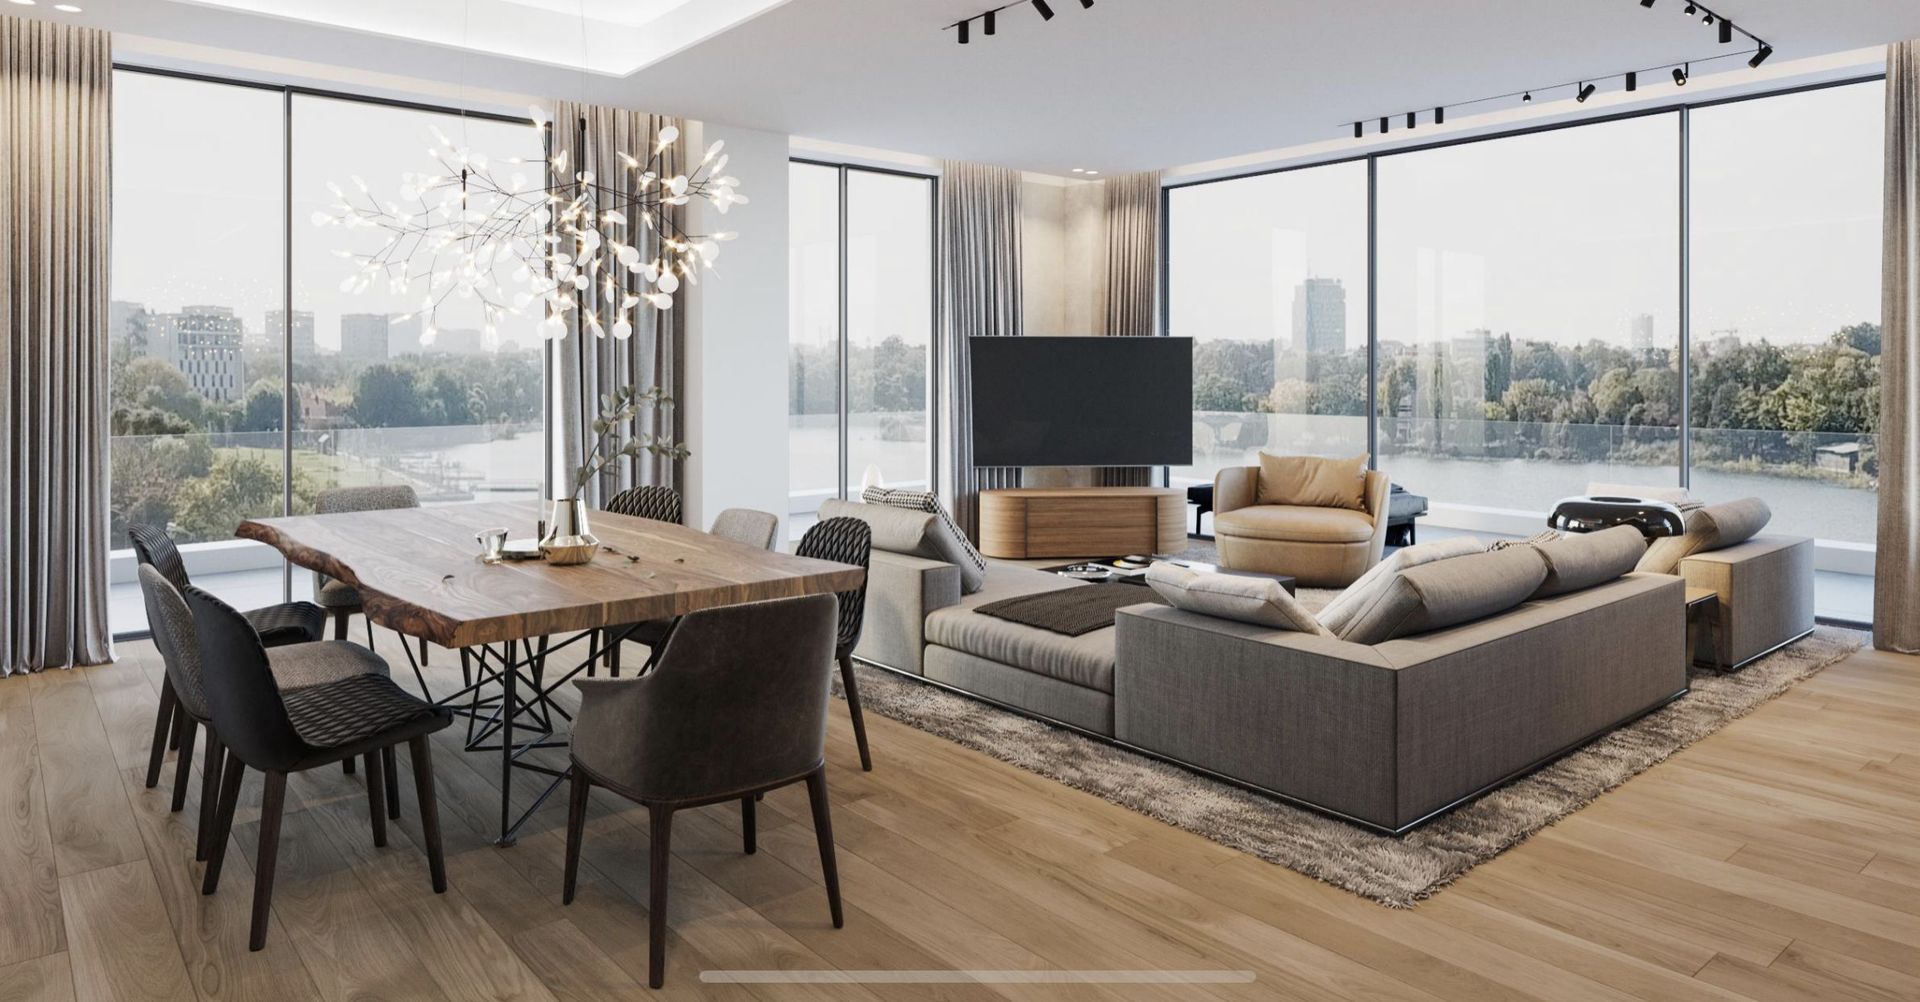 Floreasca Luxury 3 bedrooms| Concept apartments 0% commission